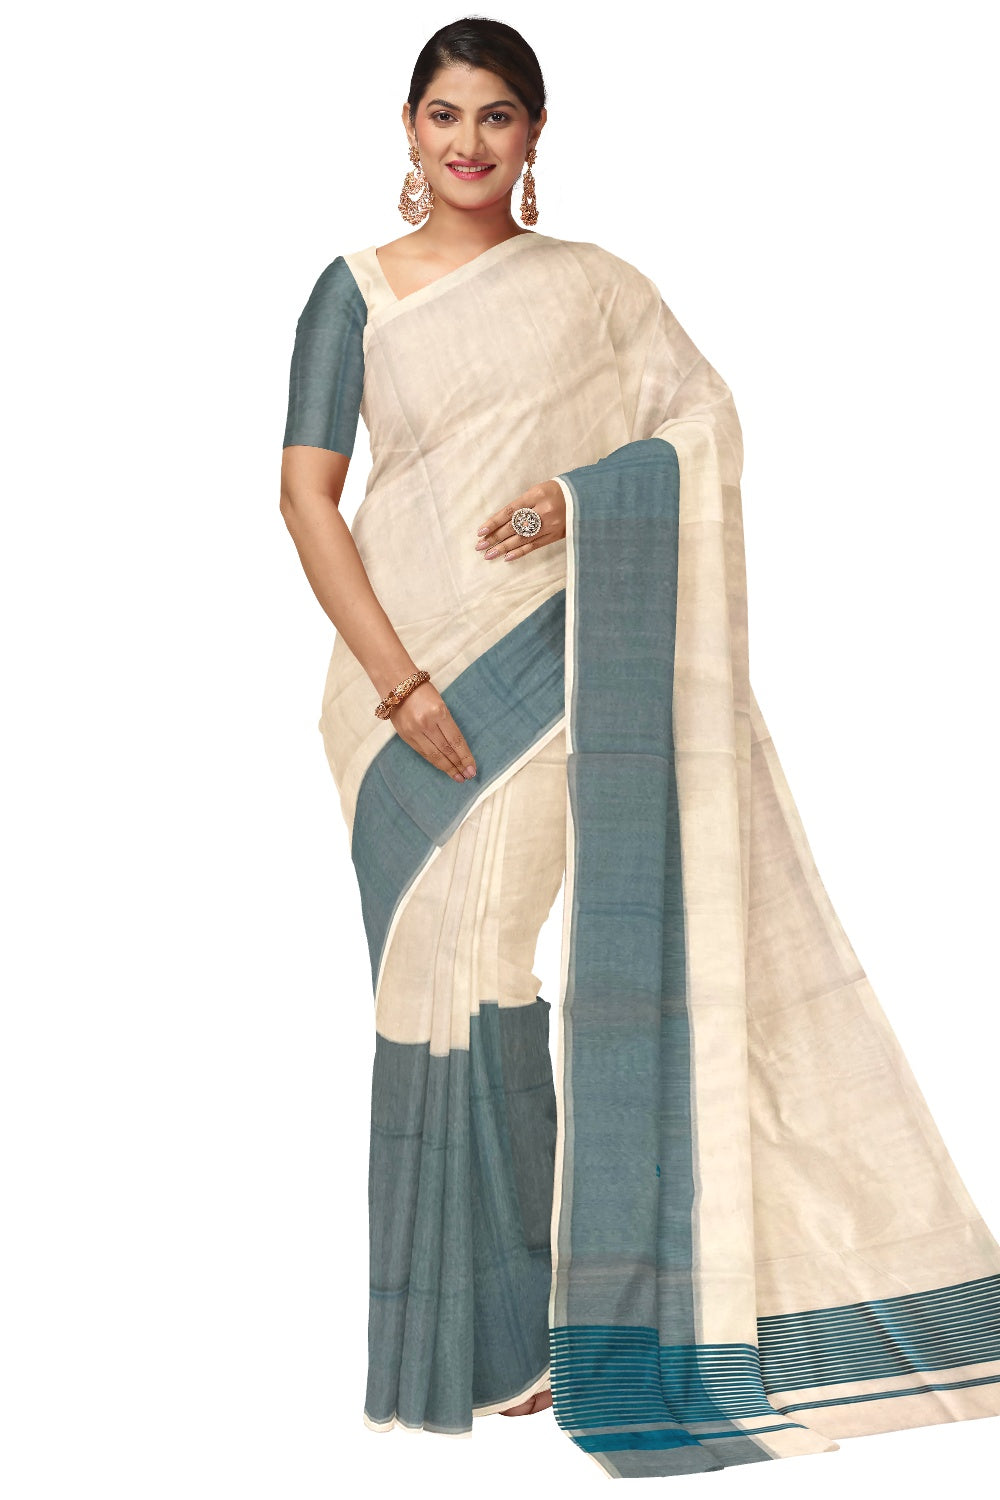 Southloom™ Premium Handloom Half & Half (Cotton / Tissue) Kerala Saree with Teal Blue Kasavu Pallu